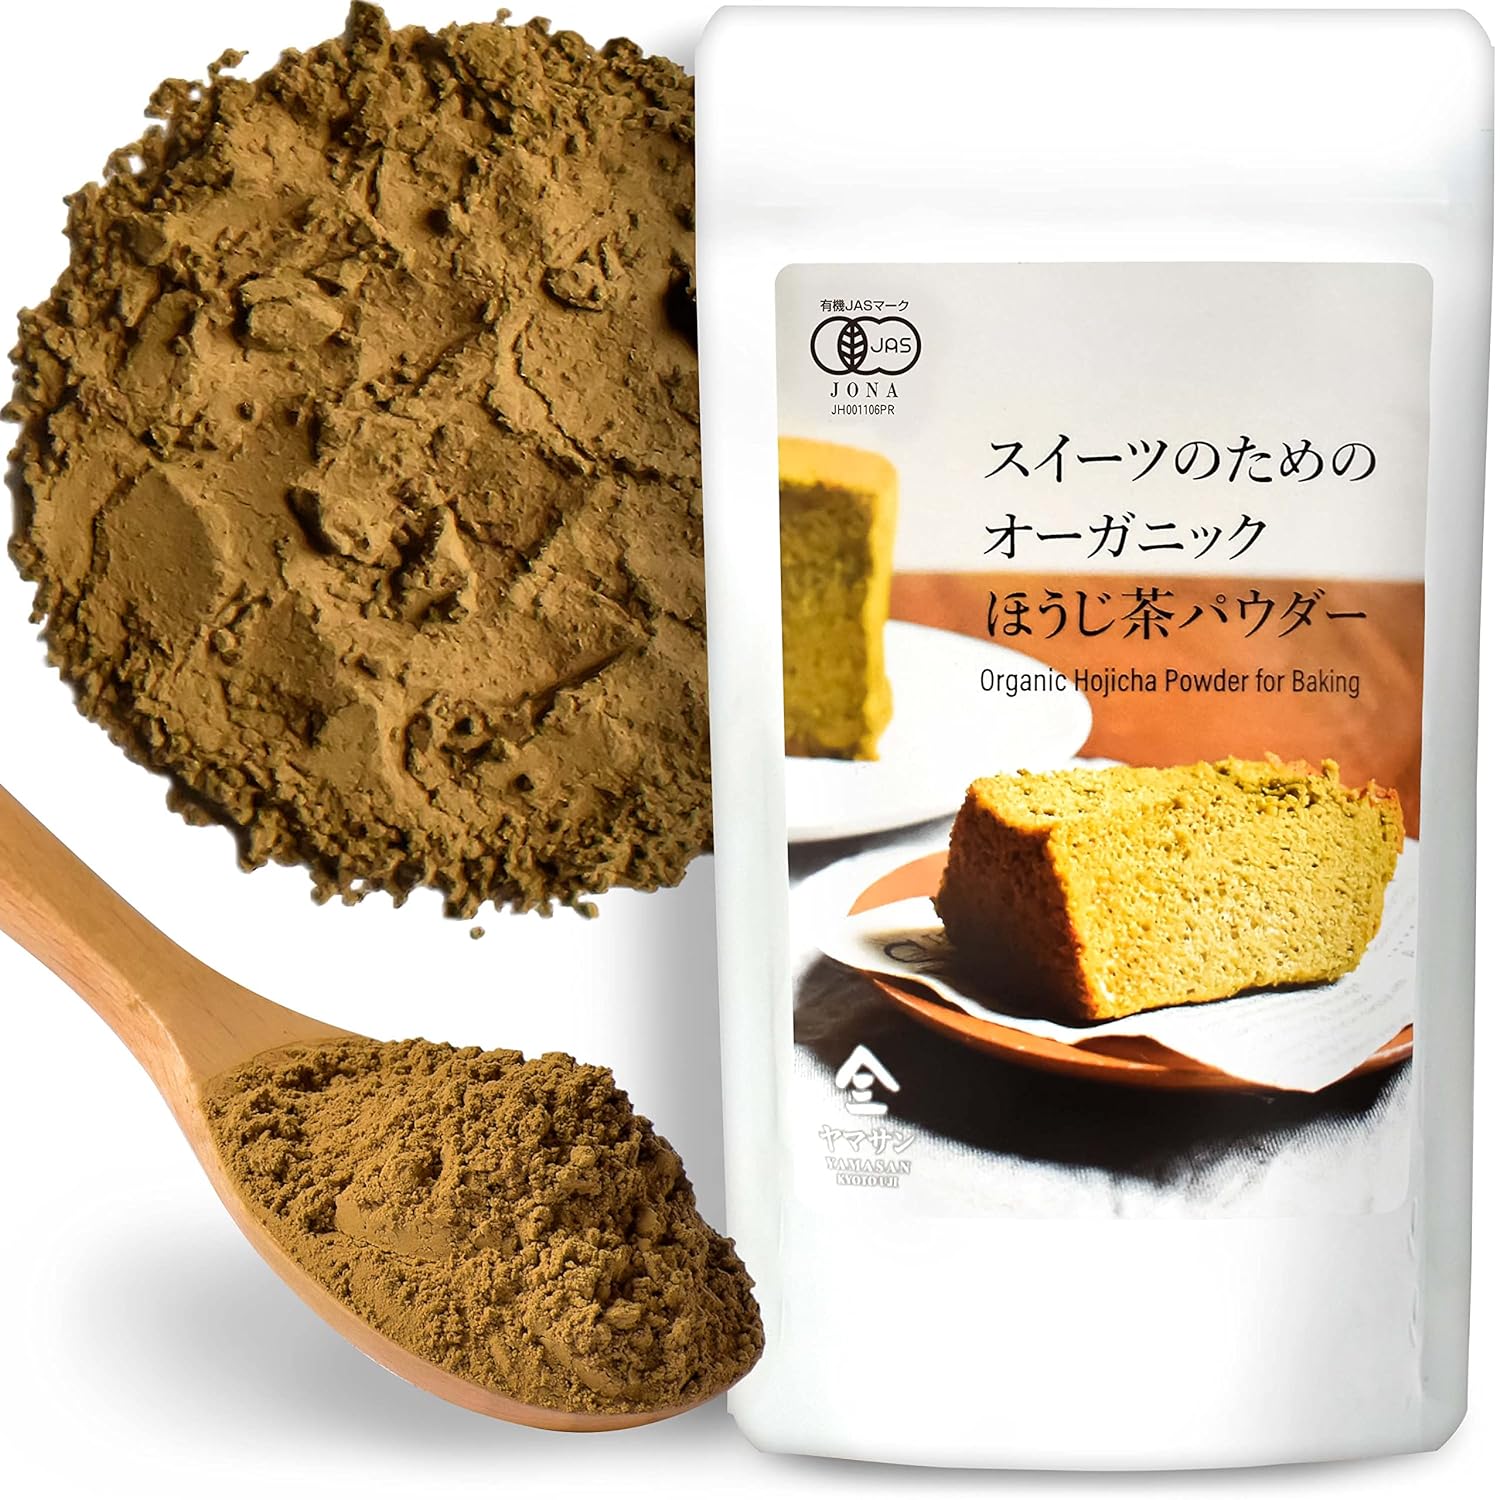 Organic Roasted green tea Hojicha Powder 100g